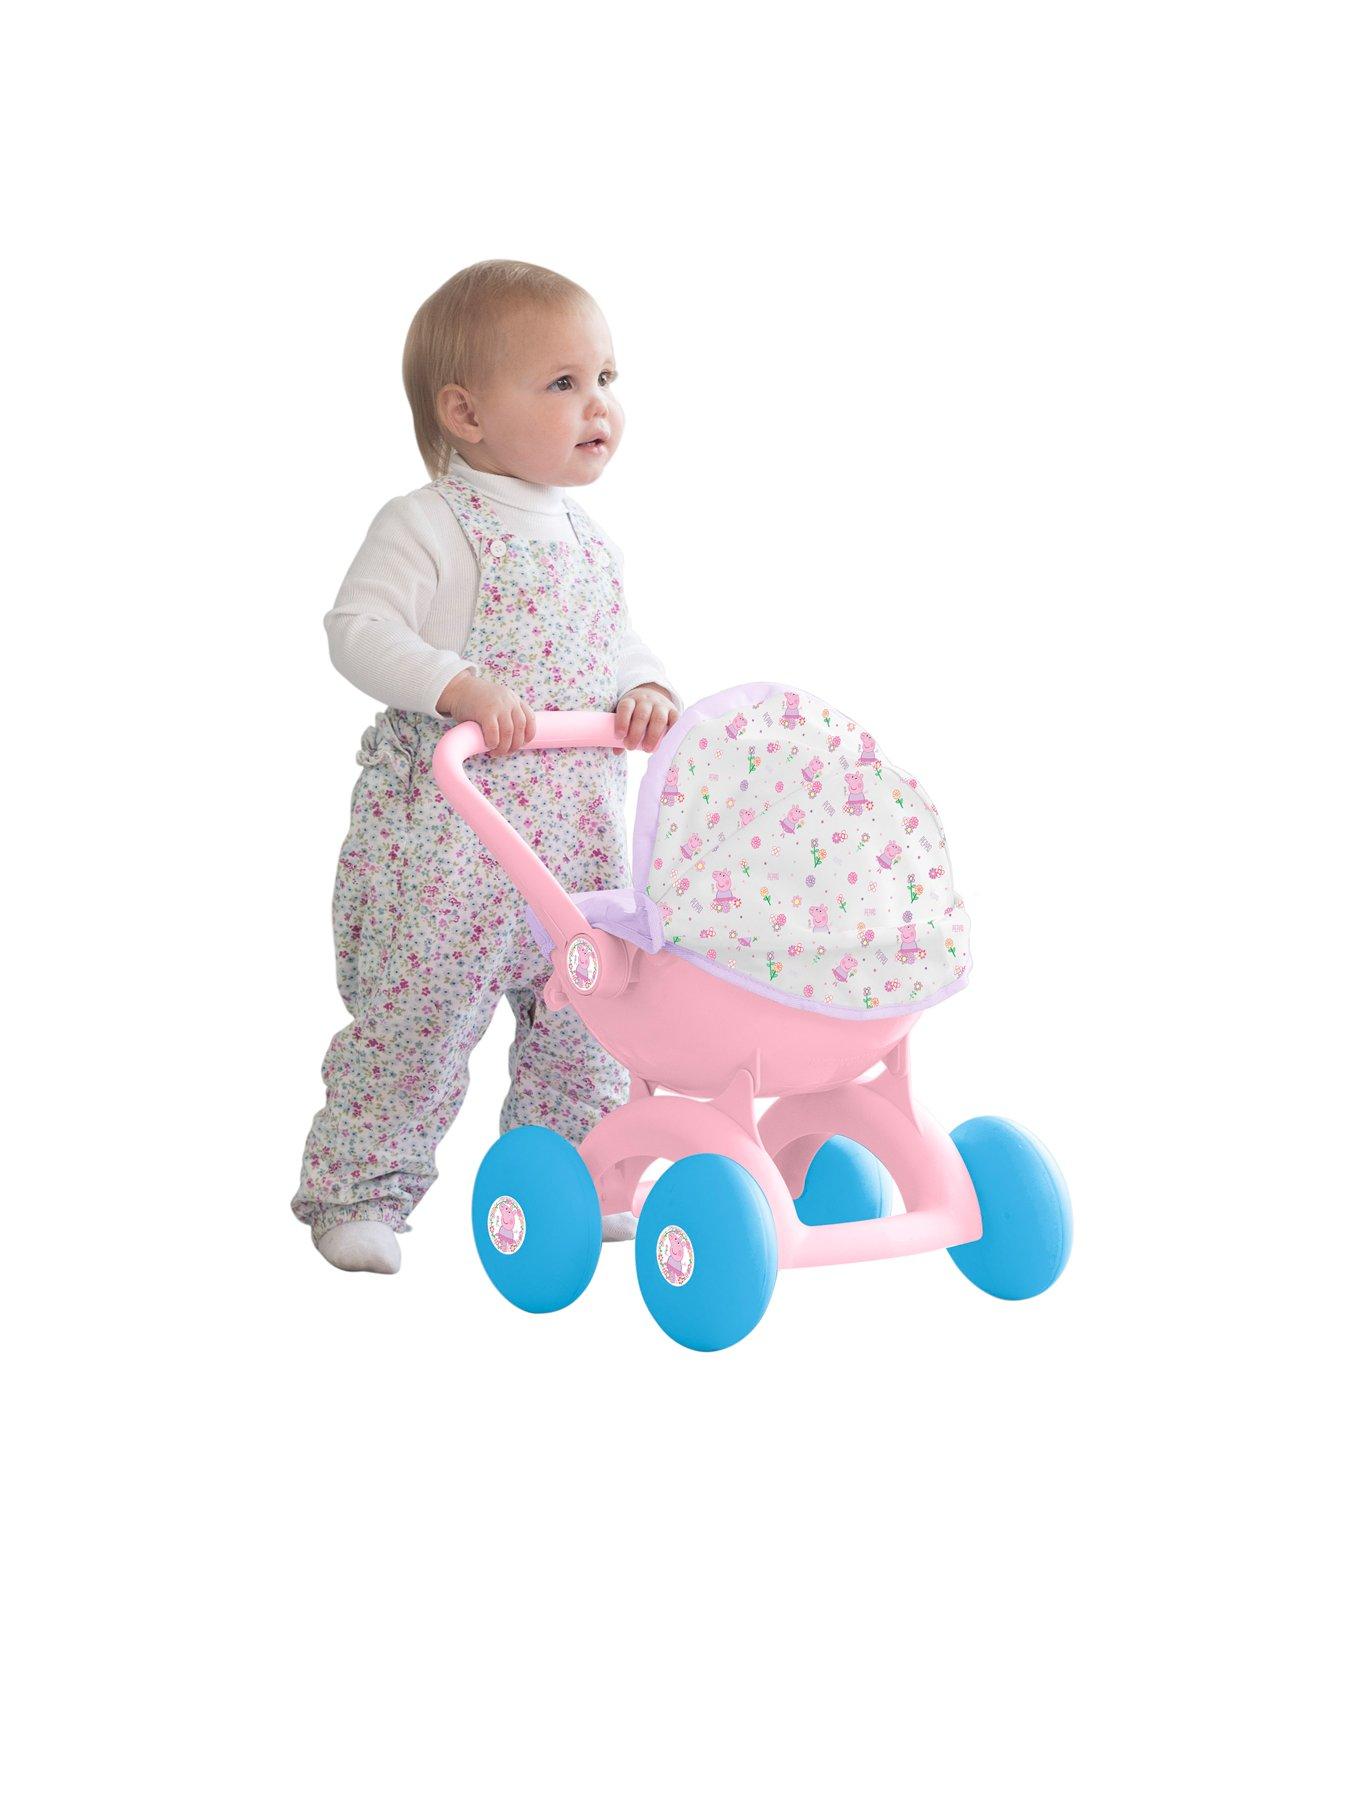 pram walker for toddlers